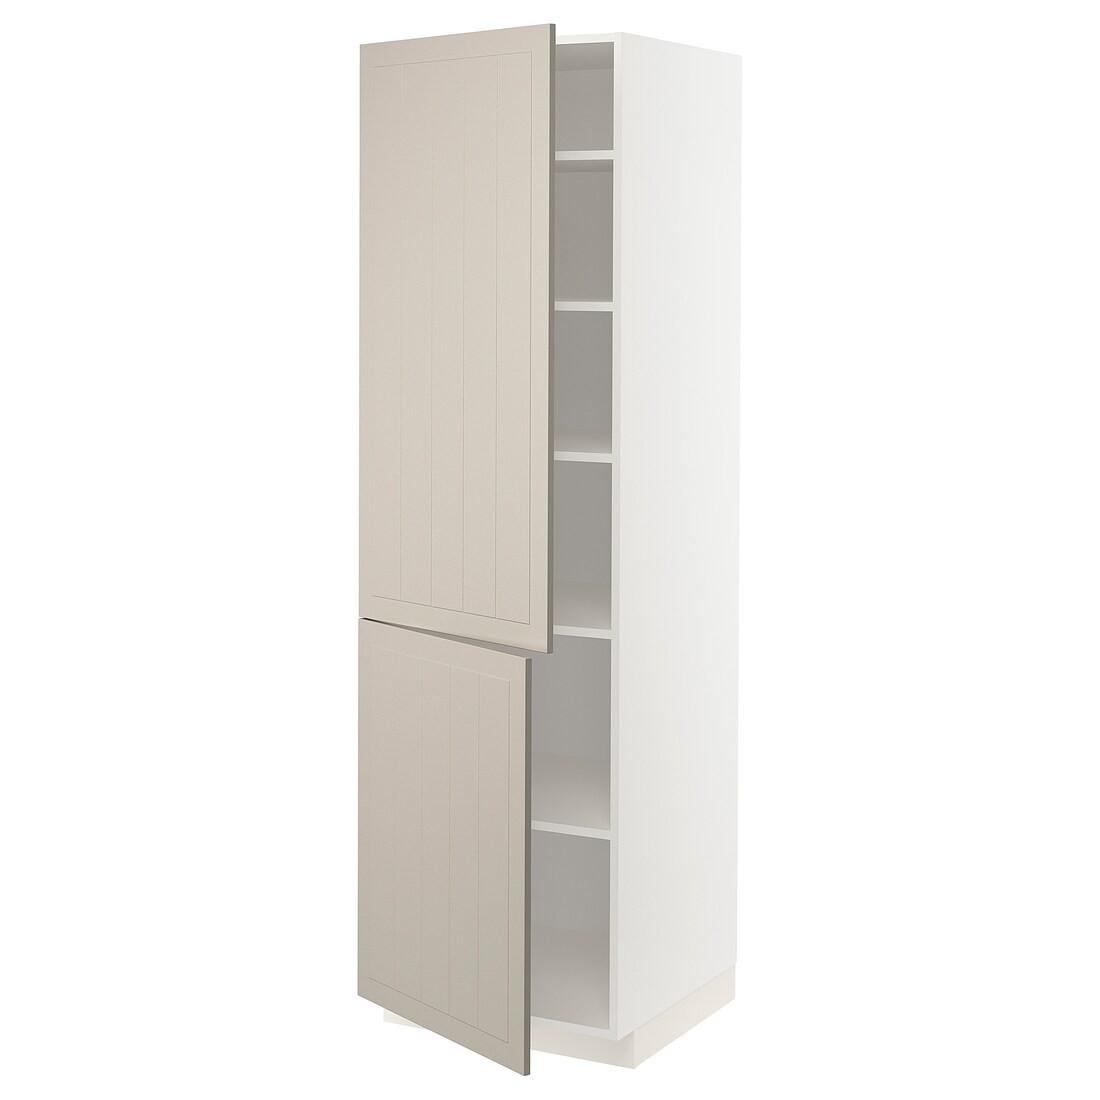 IKEA METOD МЕТОД Высокий шкаф с полками / 2 дверцы, белый / Stensund бежевый, 60x60x200 см 39460350 | 394.603.50